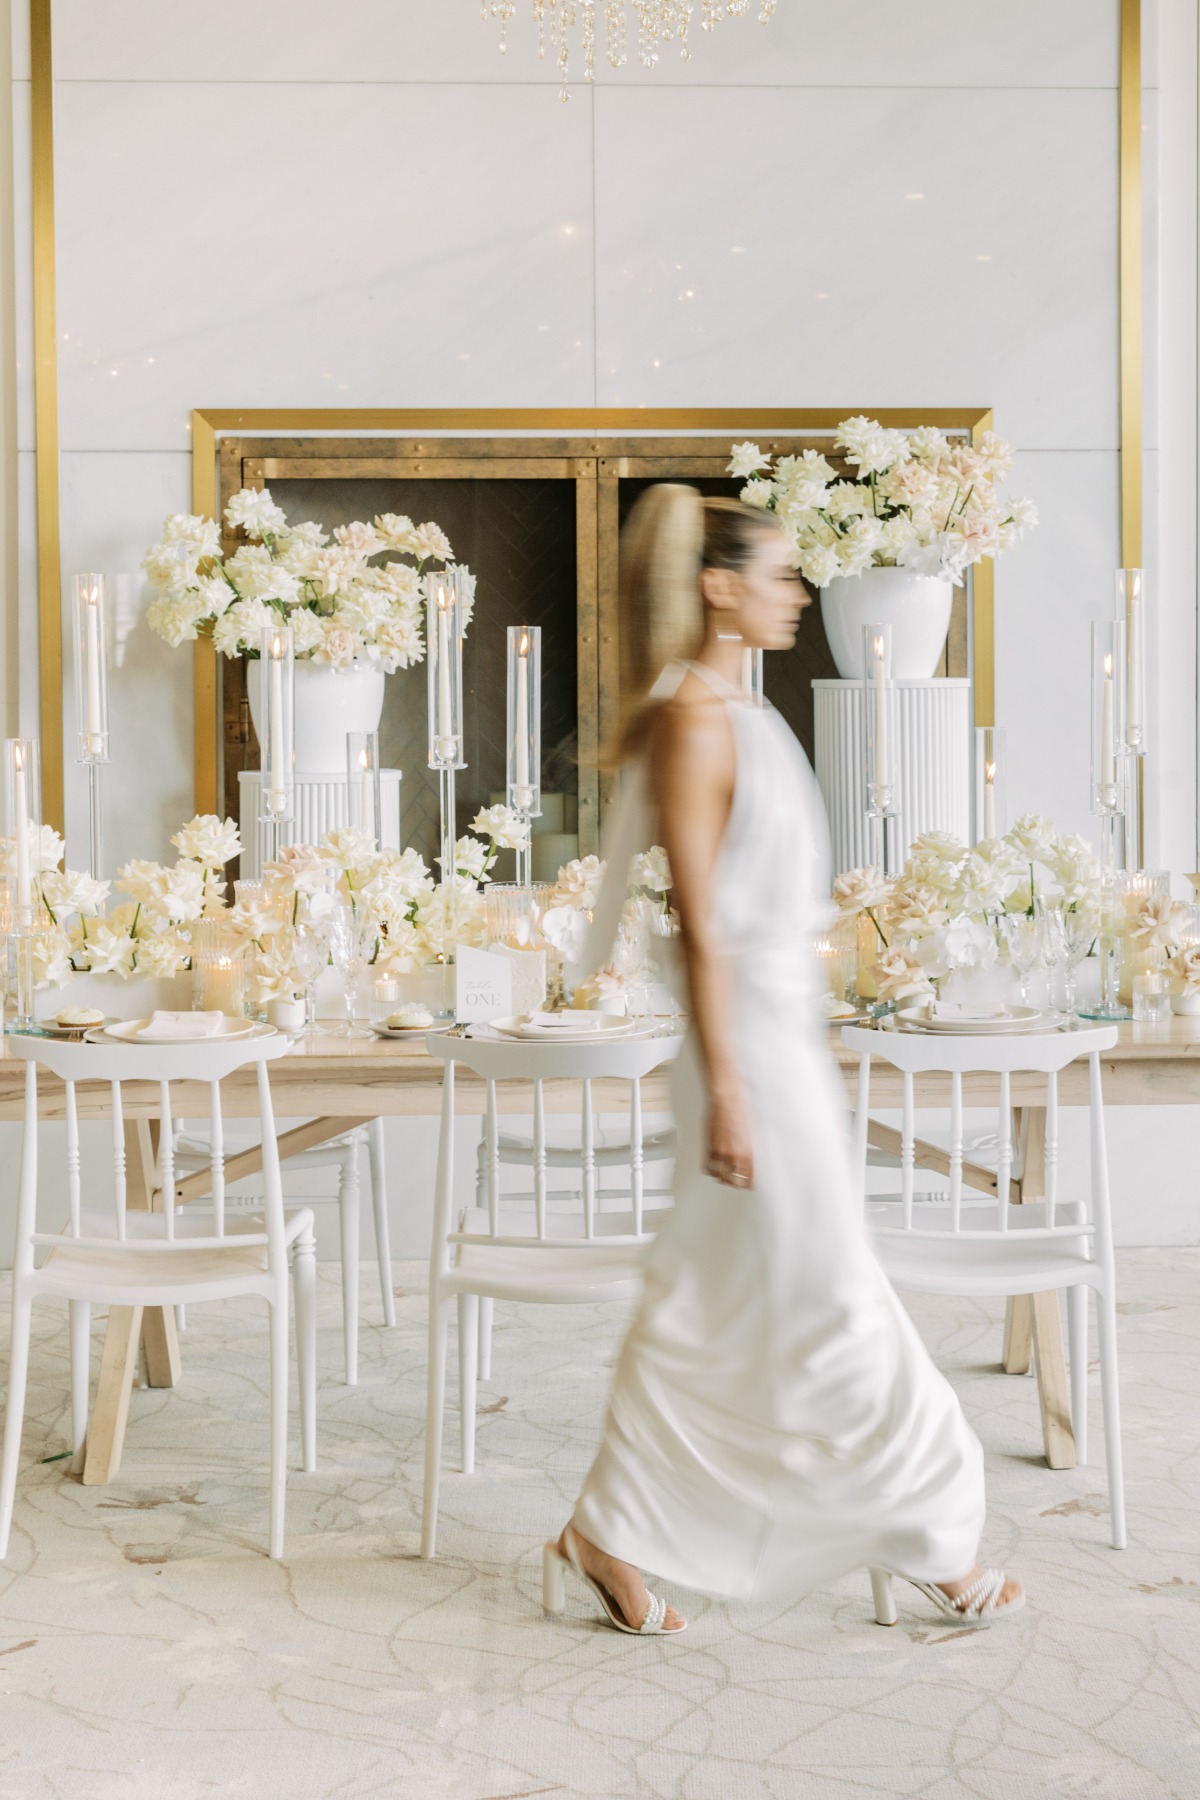 Modern motion blur bridal portrait at indoor hotel reception